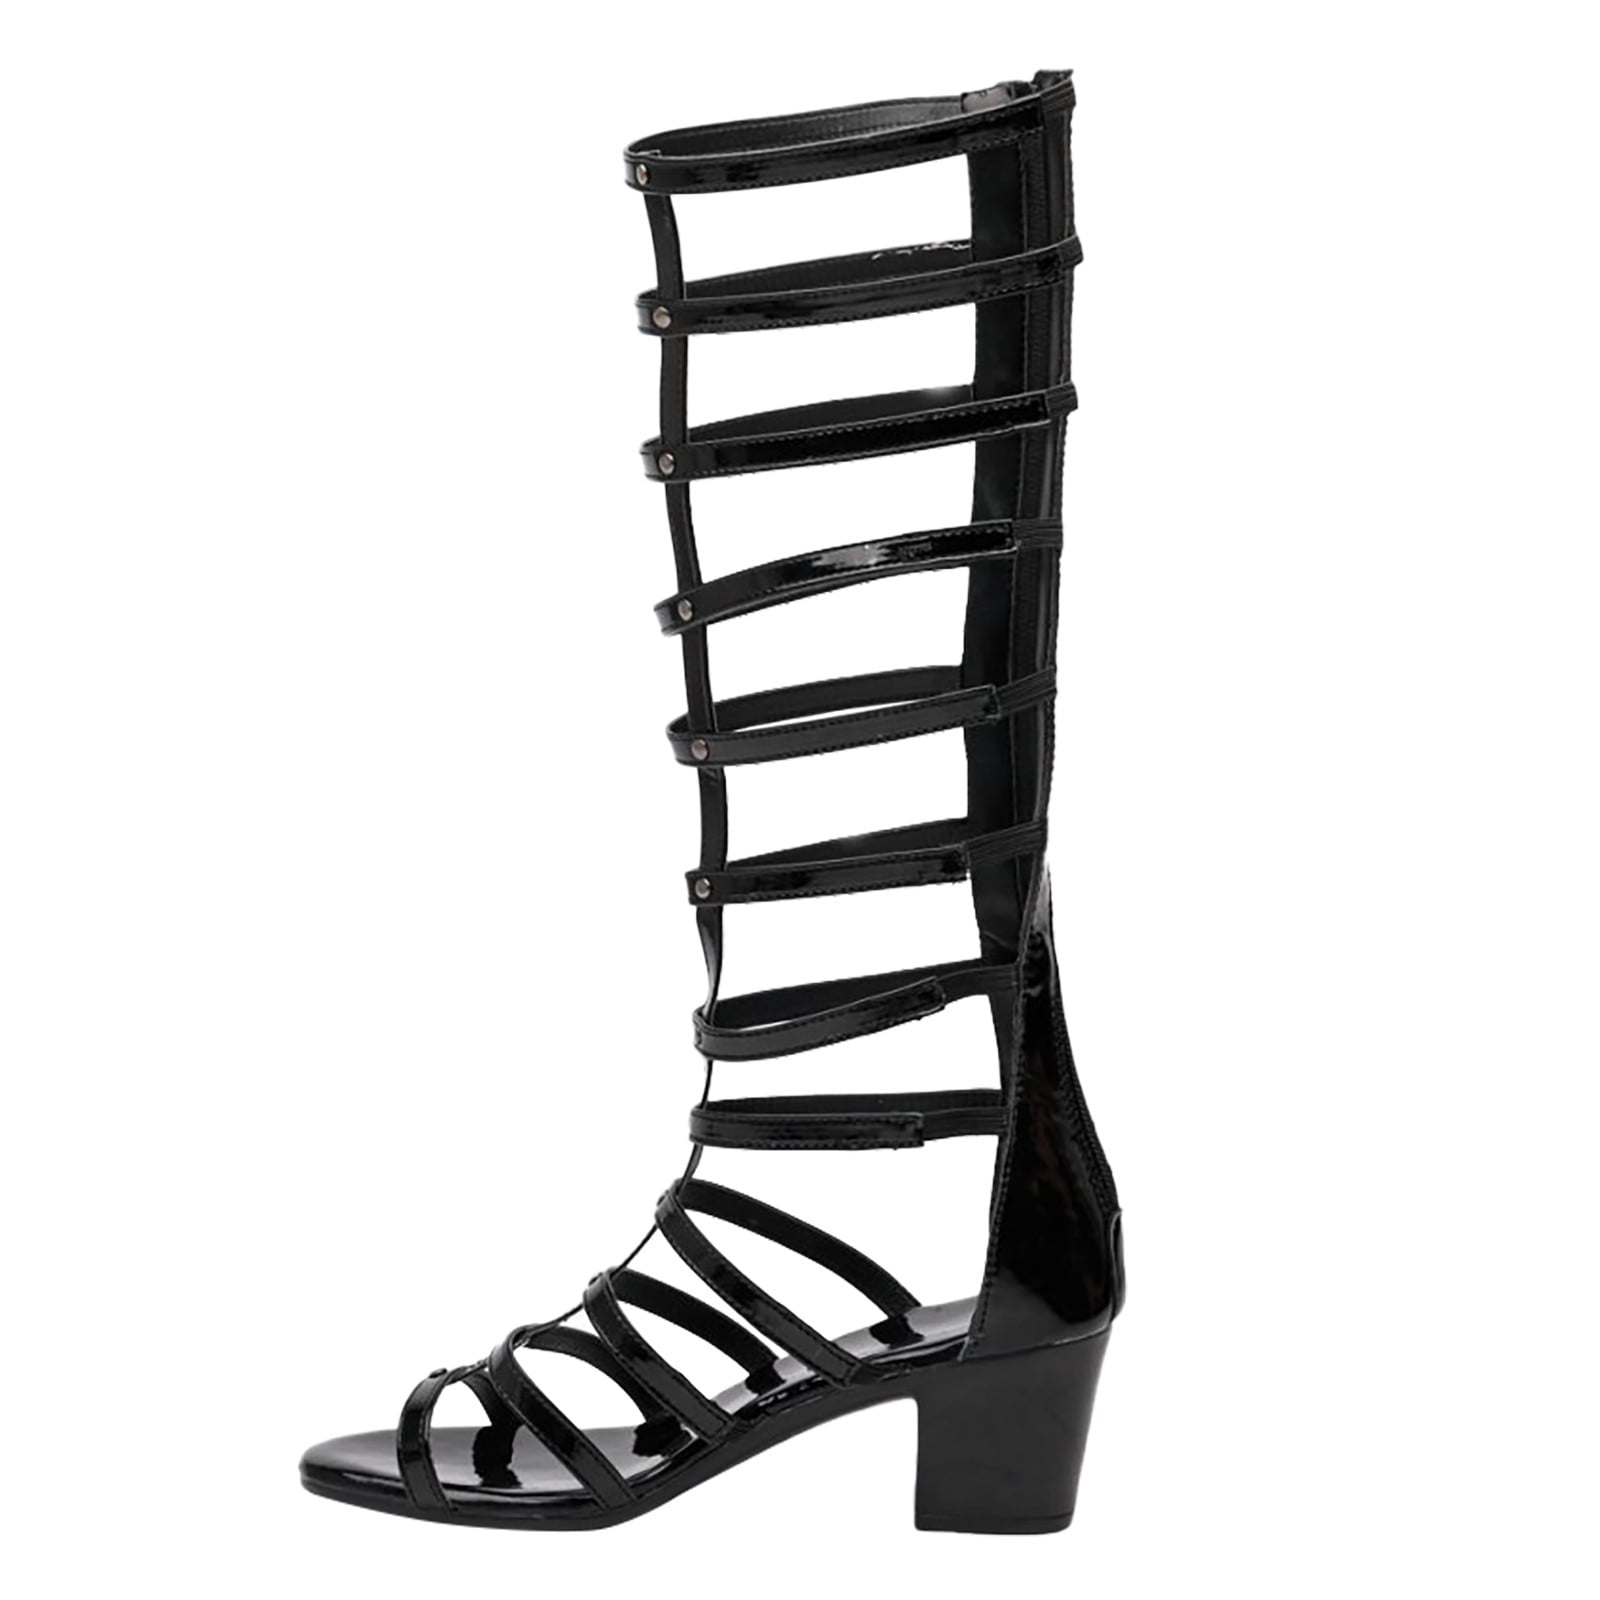 Black dress with gladiator sandals | Fashion, Style, Lulus maxi dress